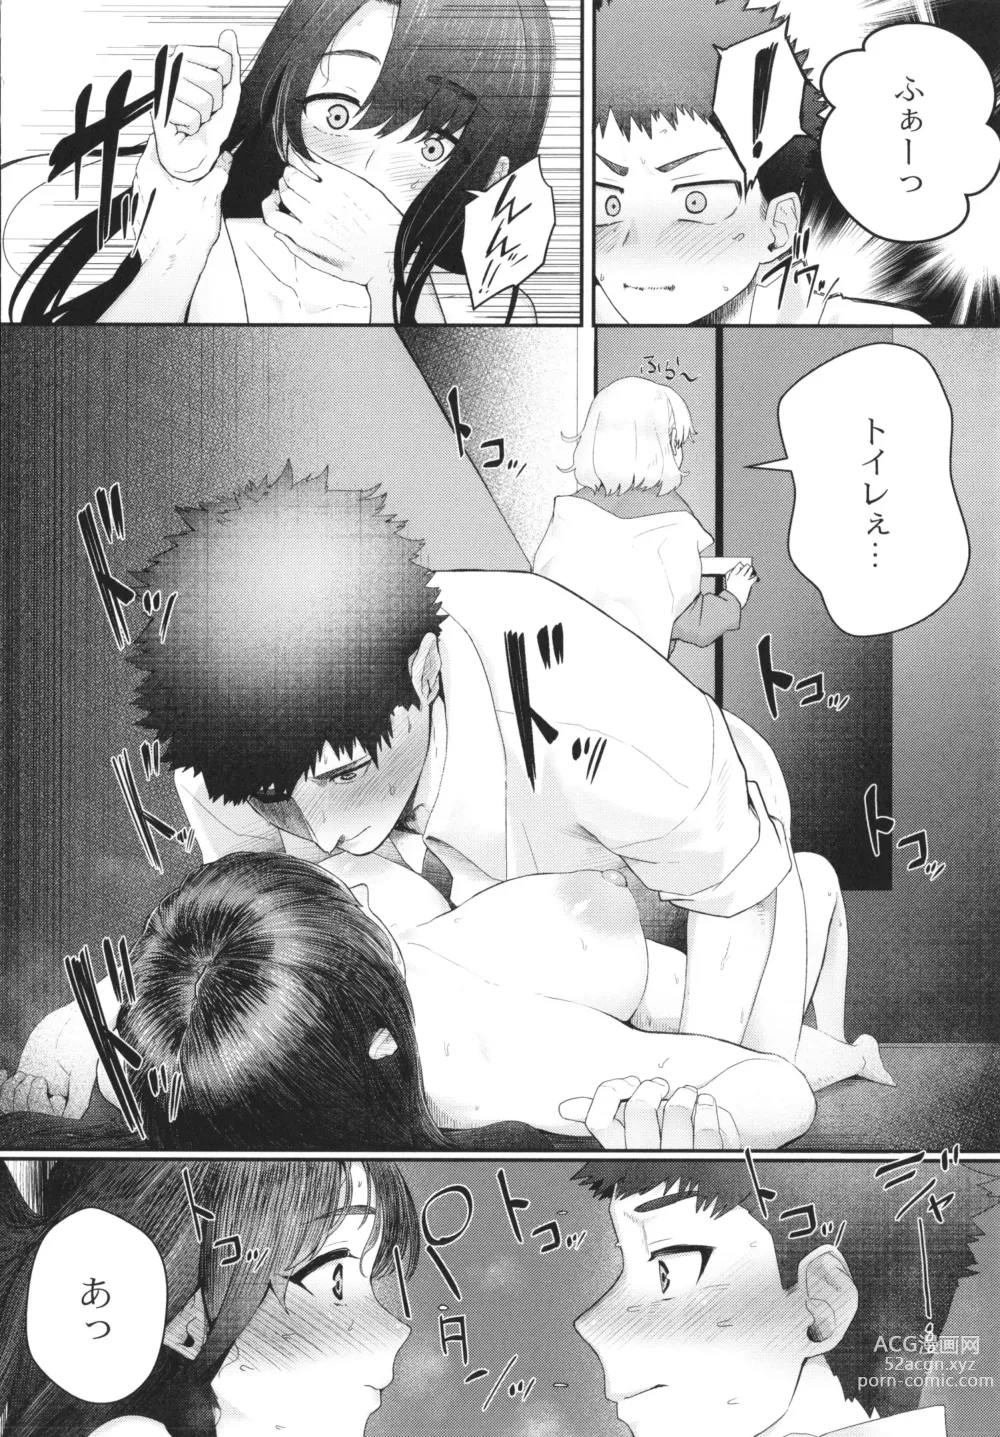 Page 203 of manga Kakuregoto